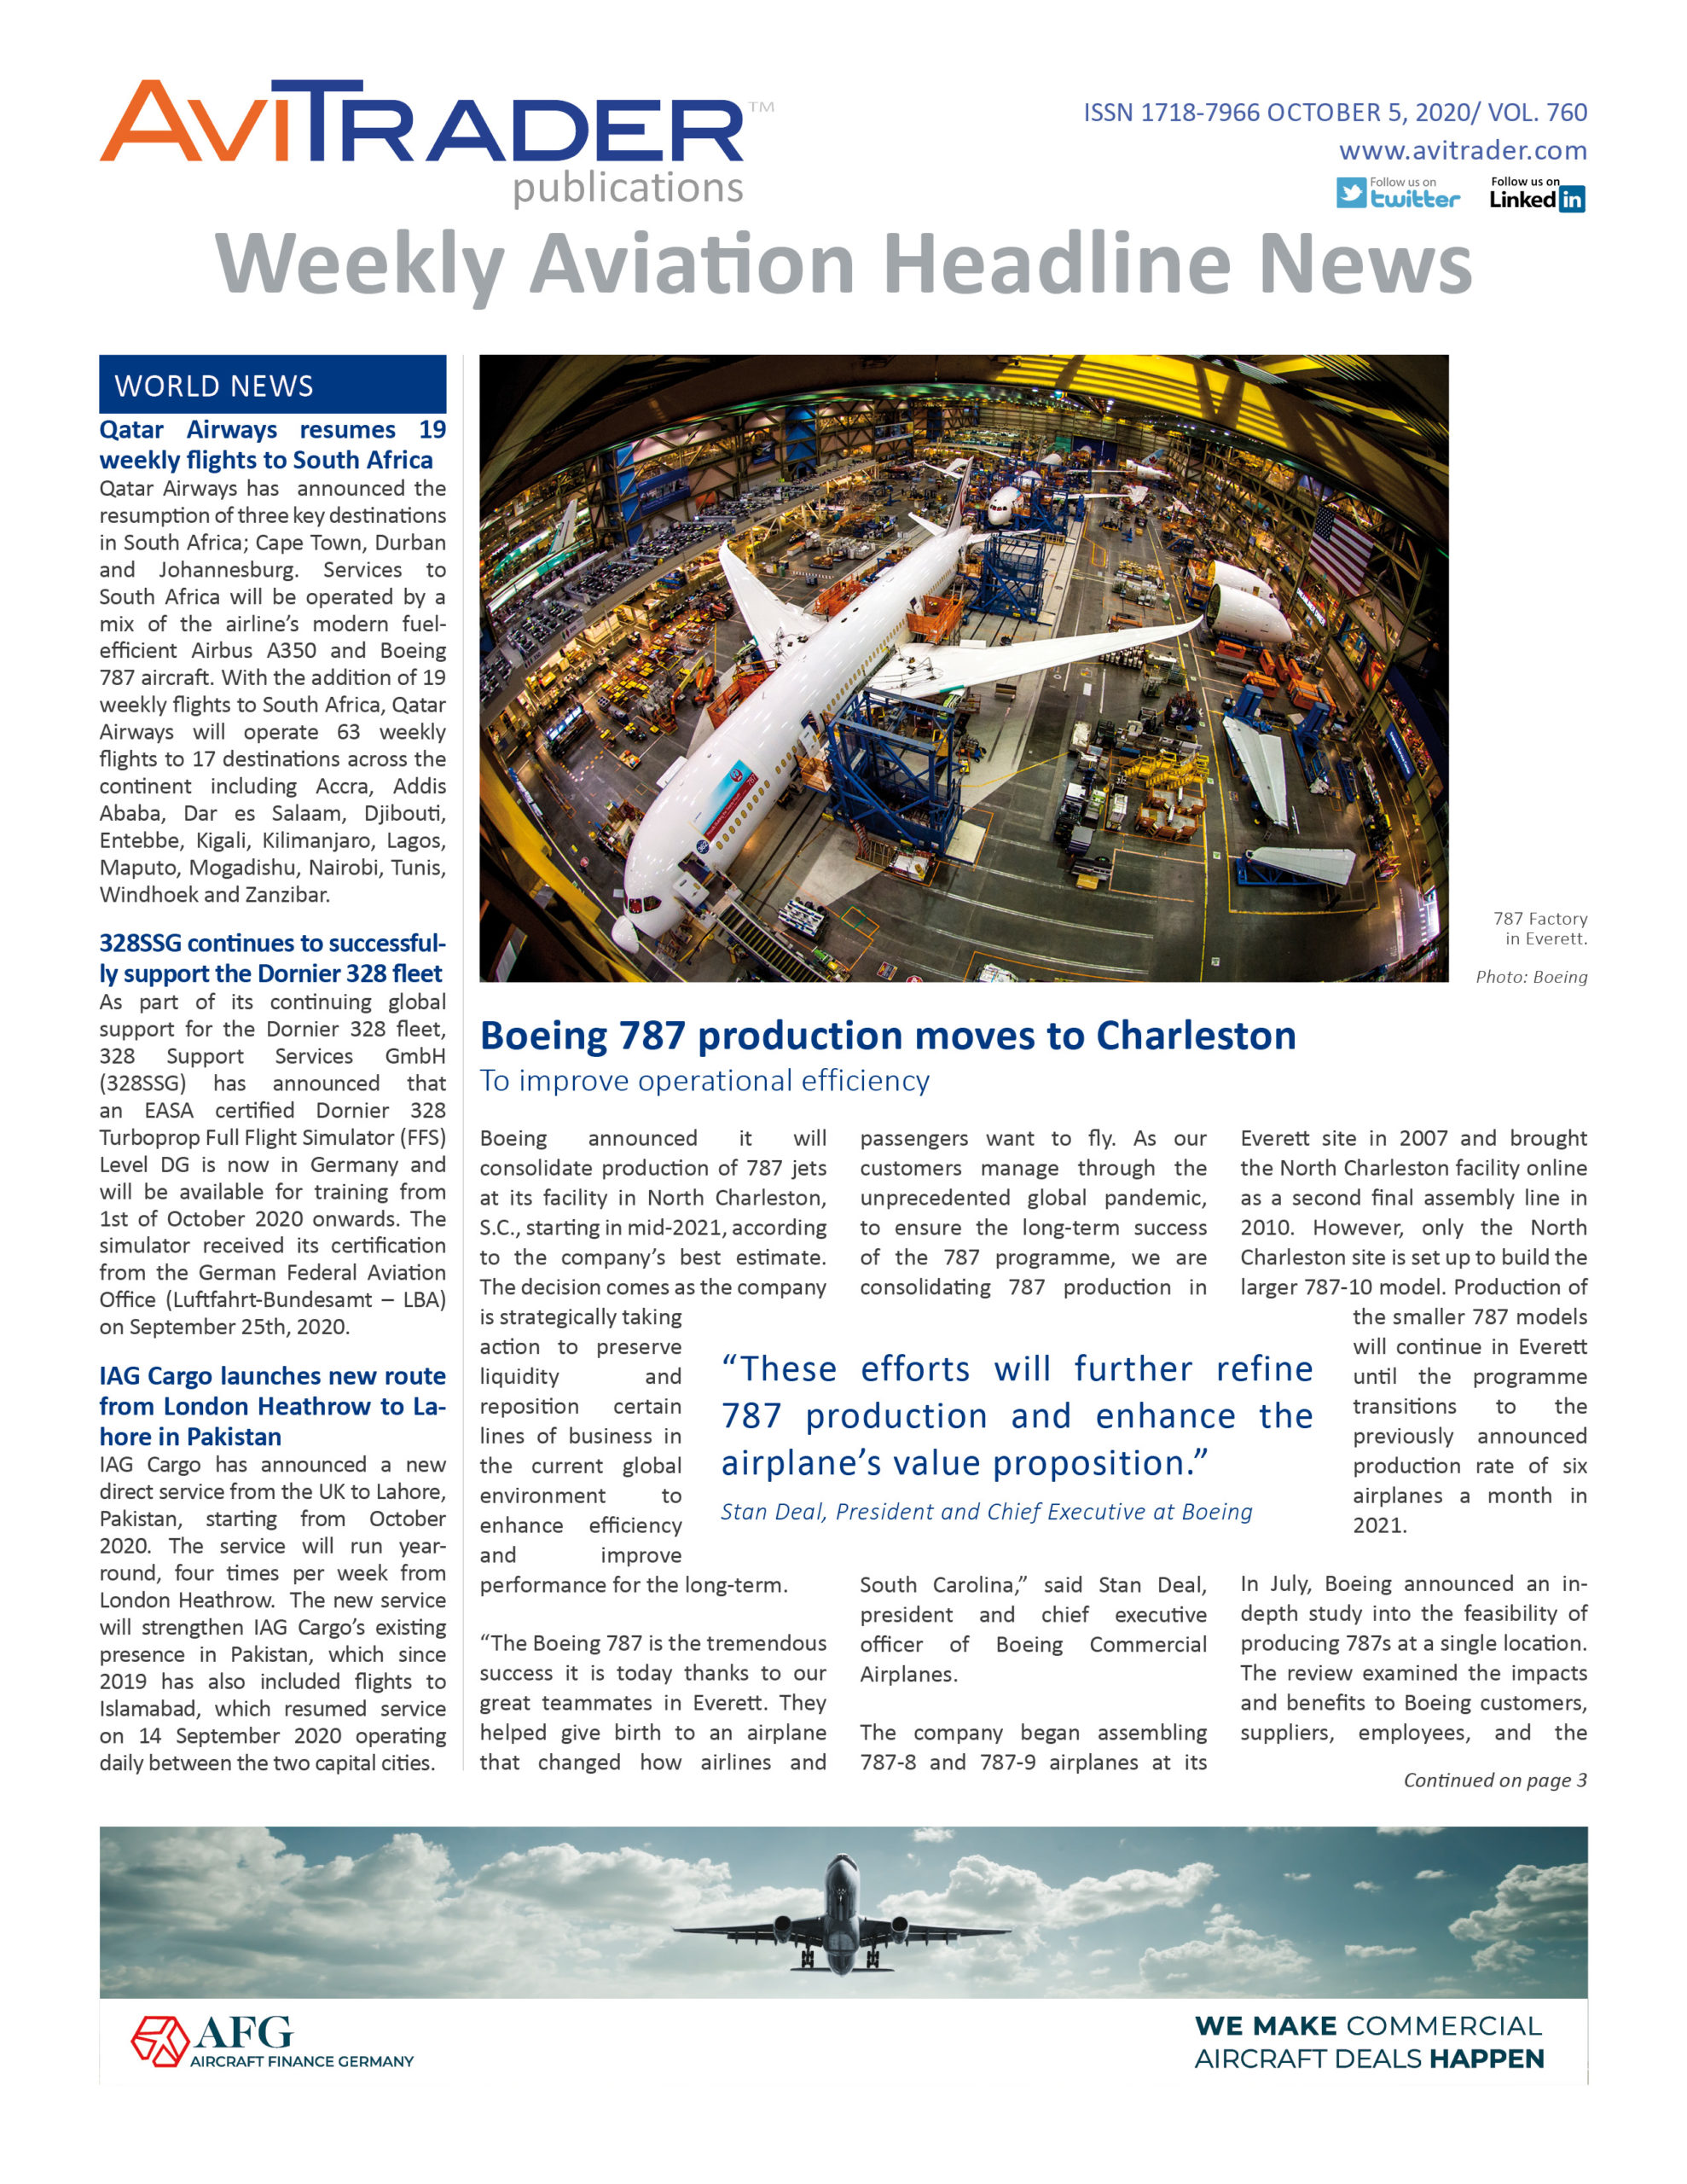 AviTrader_Weekly_Headline_News_Cover_2020-10-05